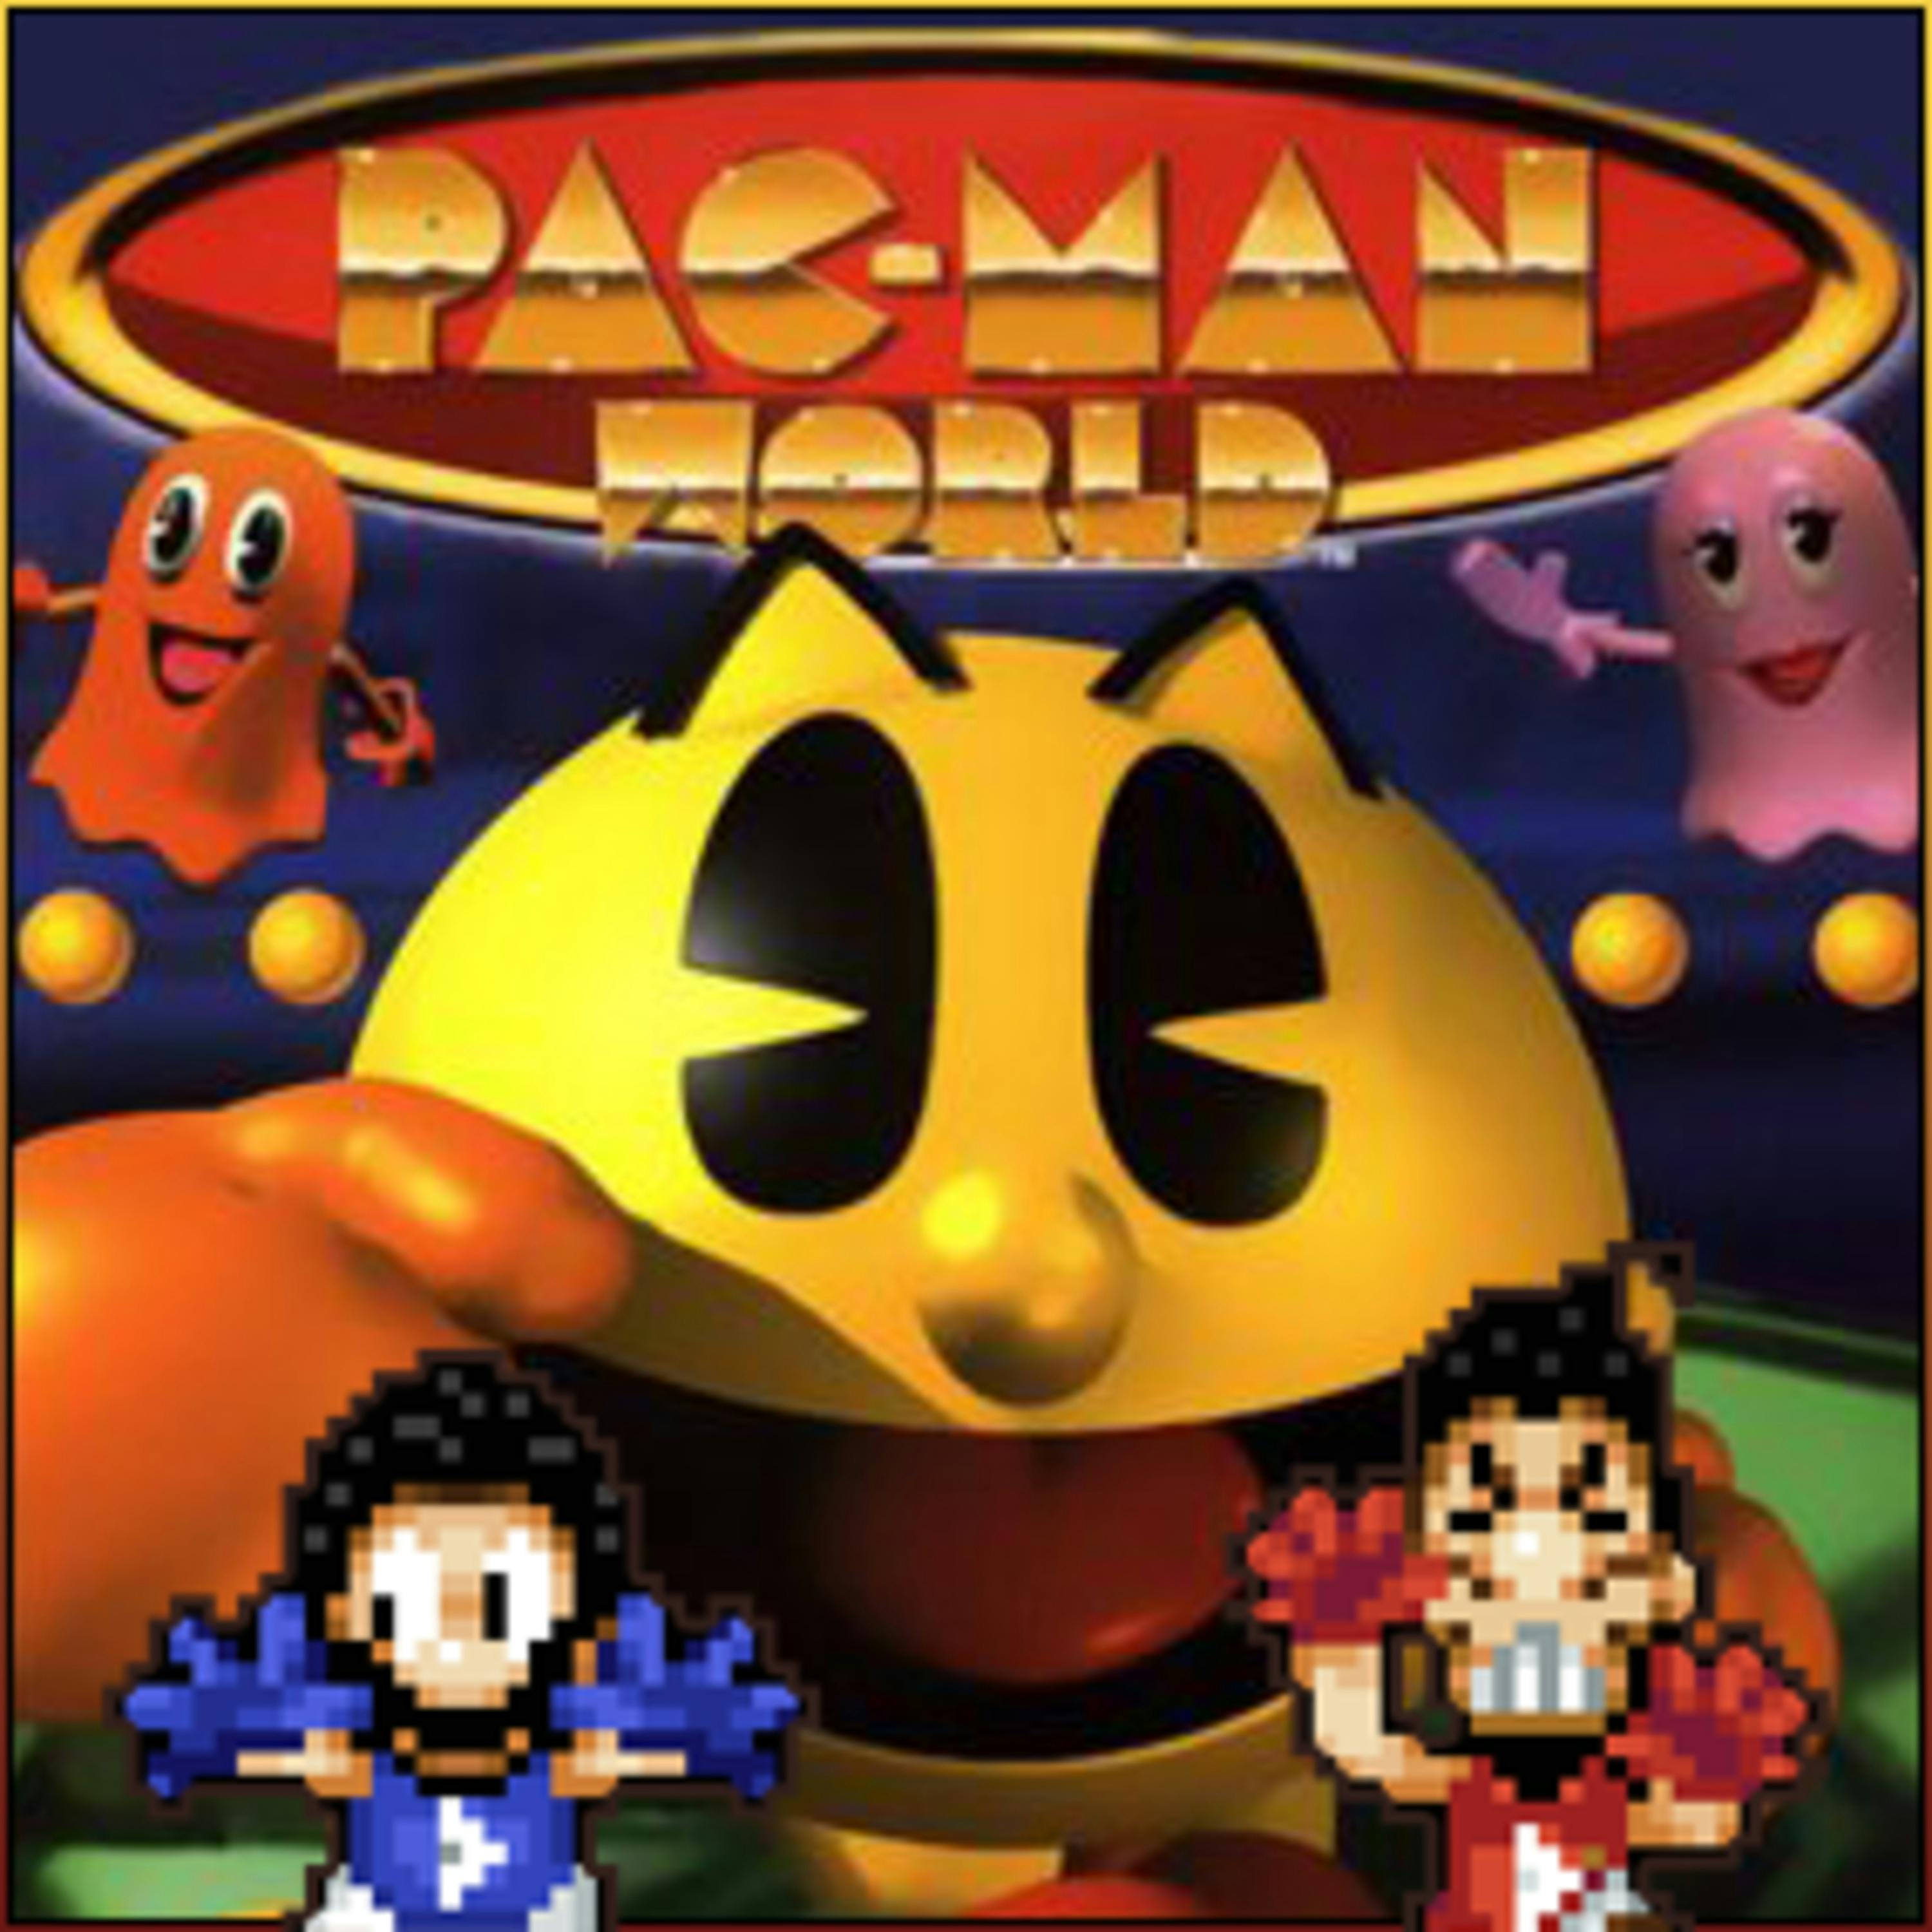 184 - Pac-Man World